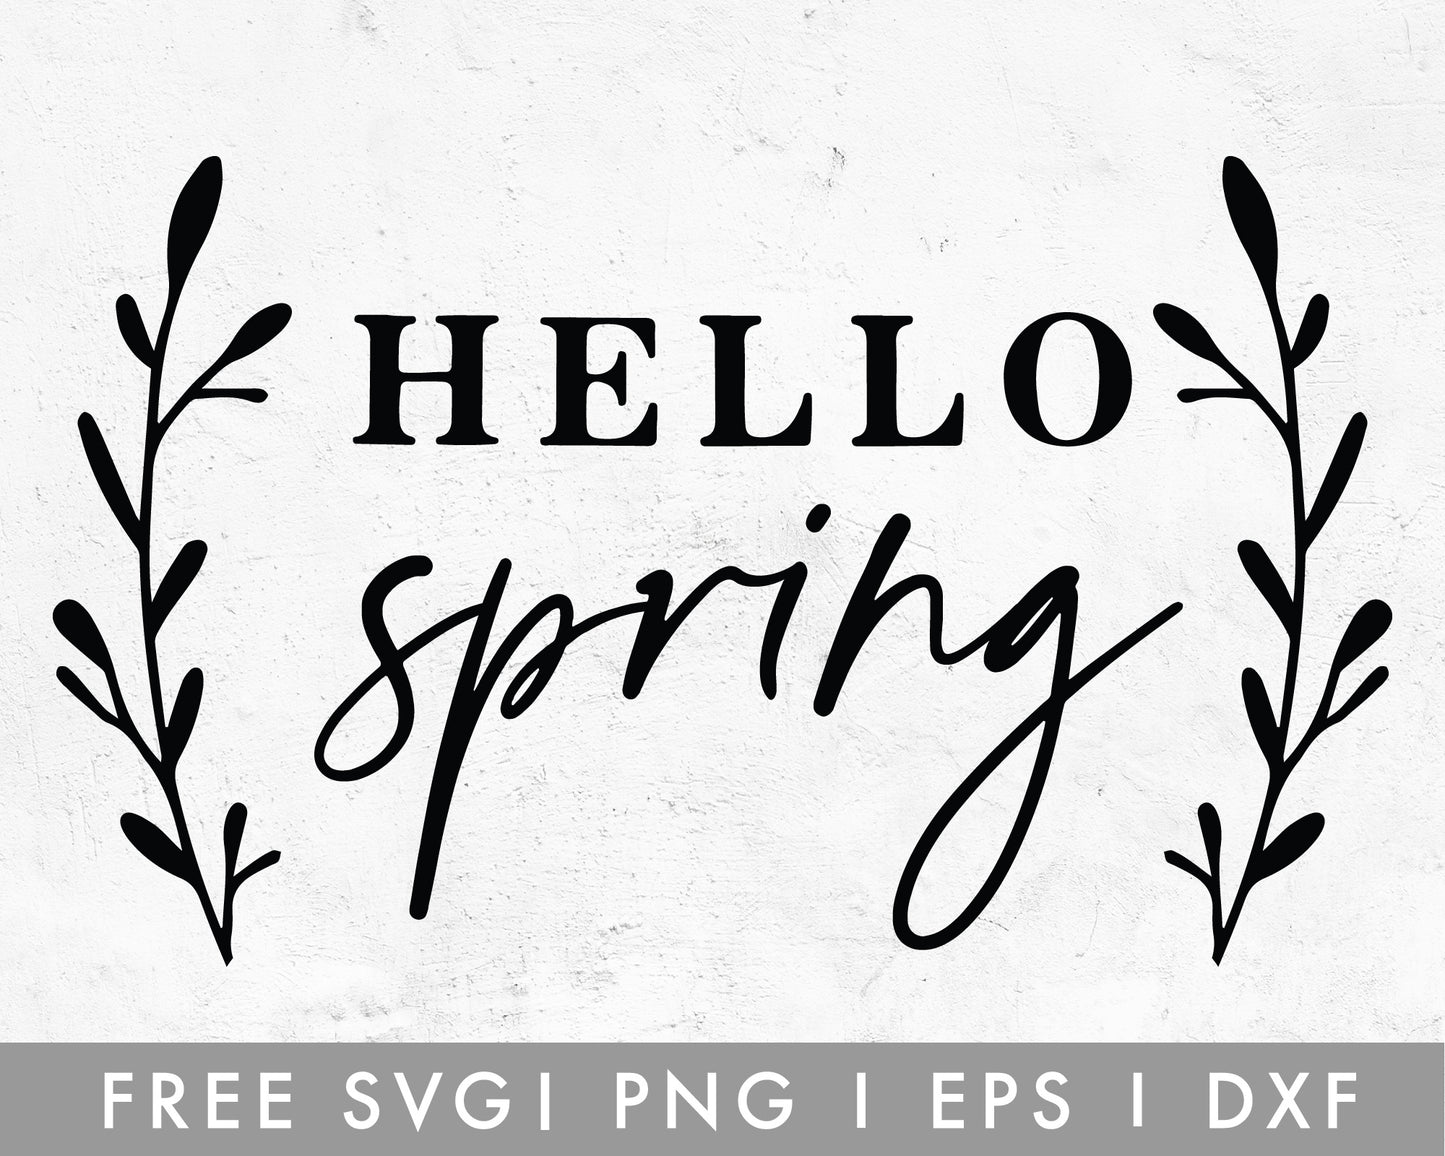 FREE Hello Spring SVG Cut File for Cricut, Cameo Silhouette | Free SVG Cut File